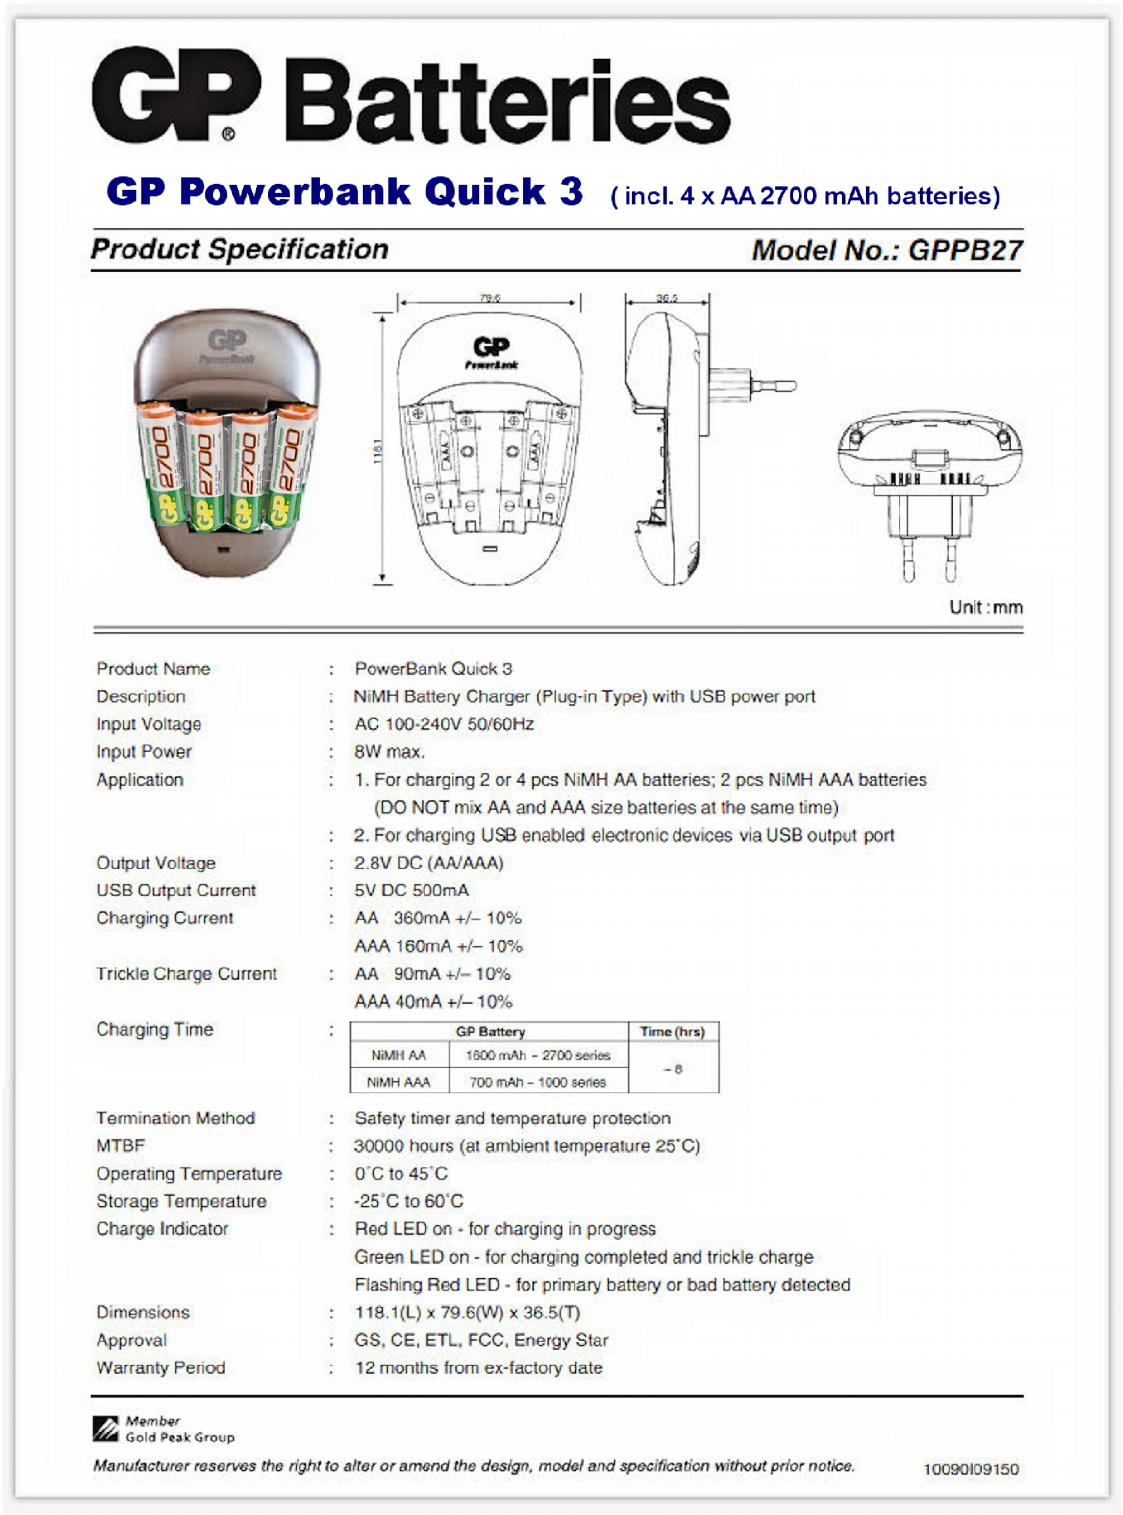 Handleiding Gp batteries Powerbank Quick 3 (pagina 1 (Engels)